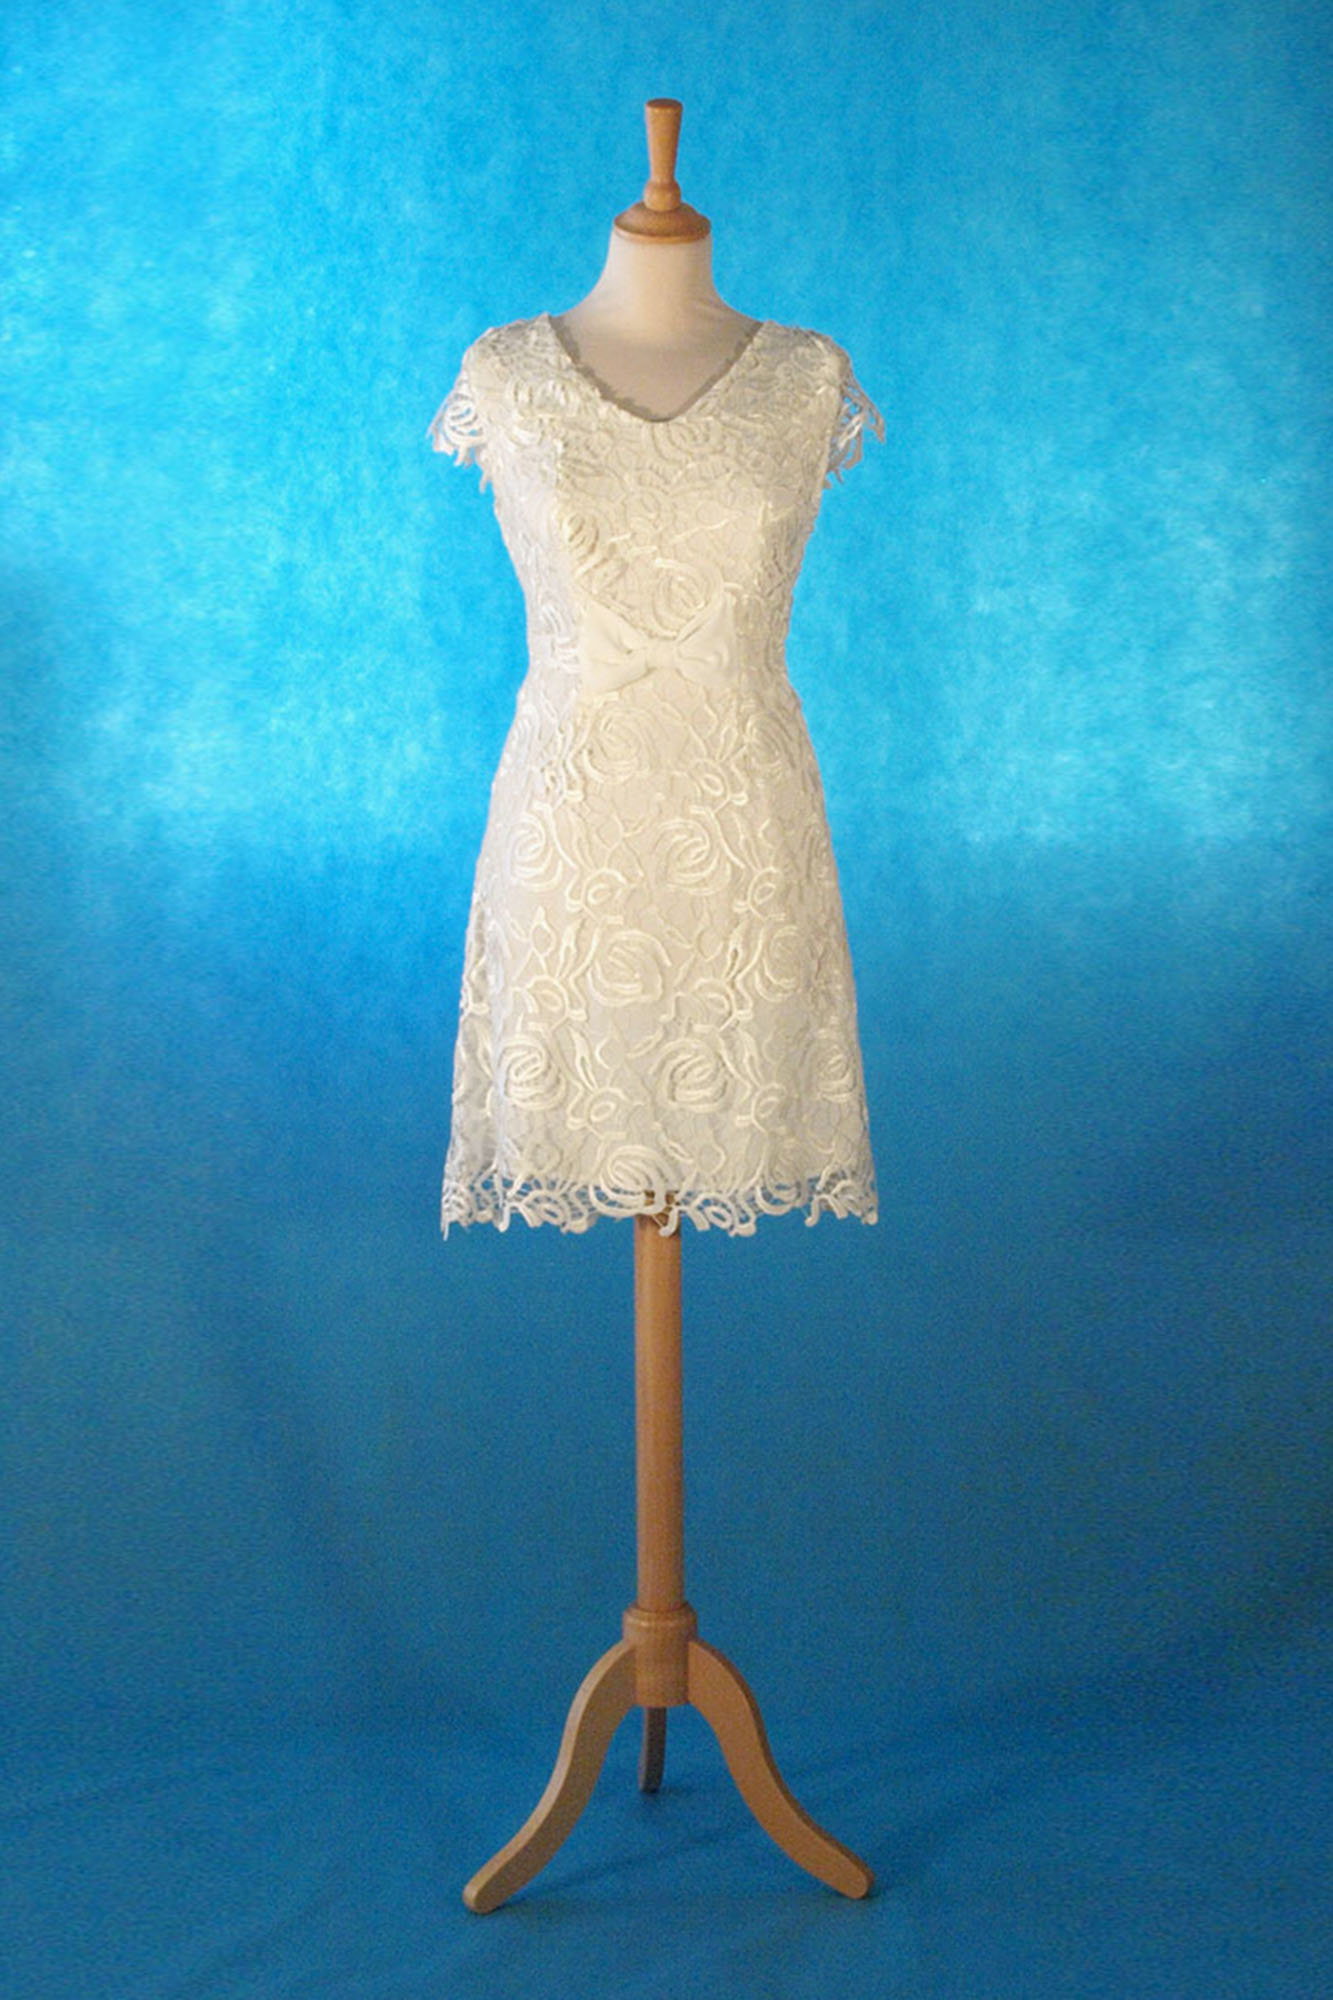 Robe de Coeur - Robe de mariée - Albi - Tarn - robe neuve - petit budget - destockage magasin